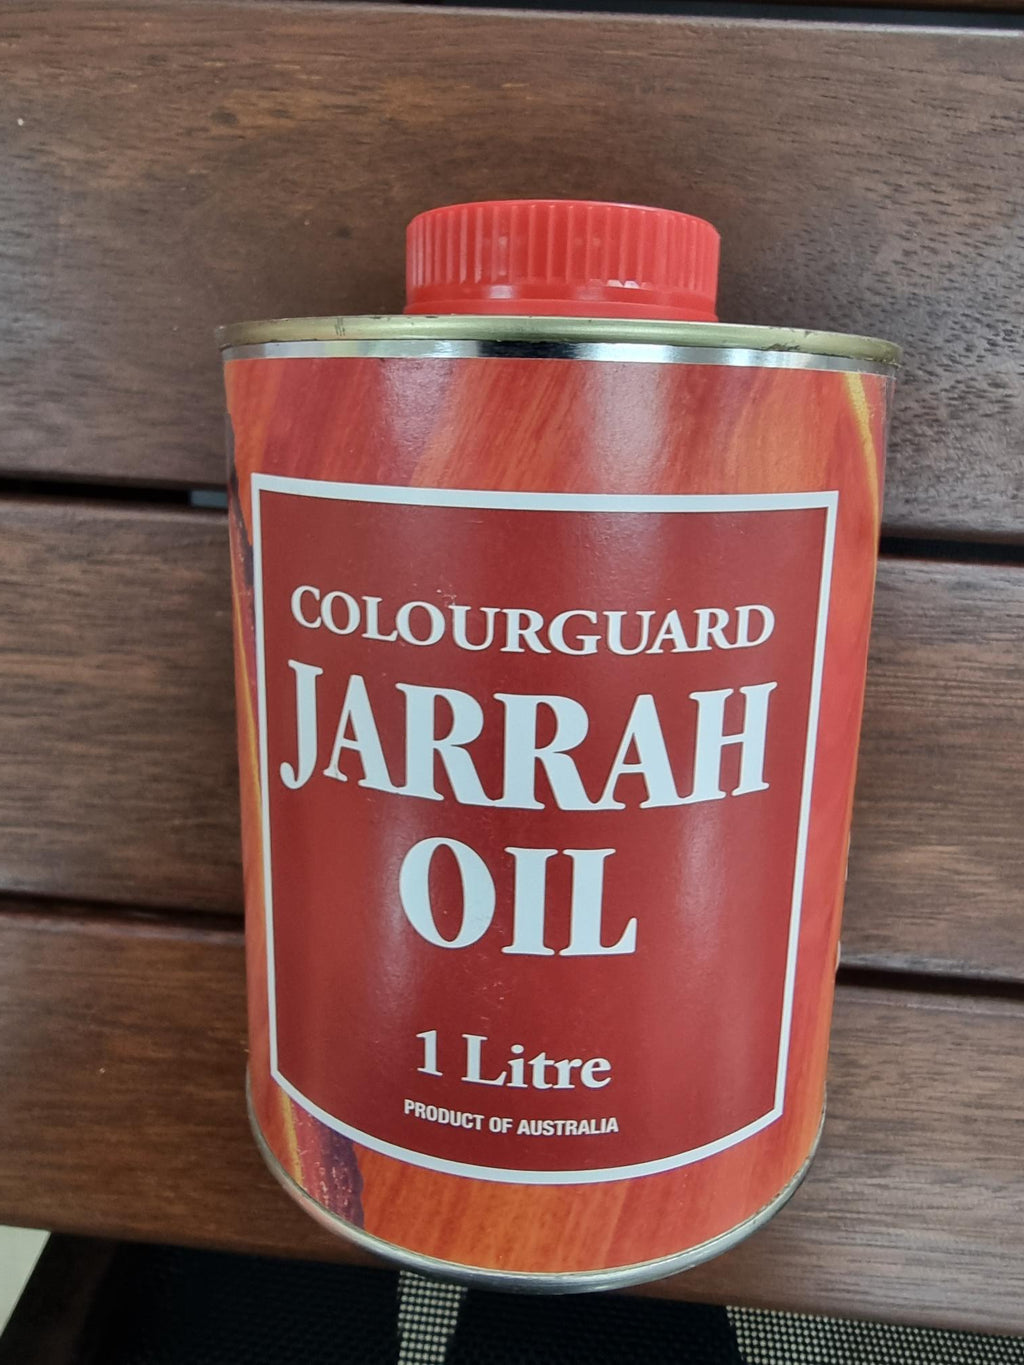 Colourguard Jarrah Oil